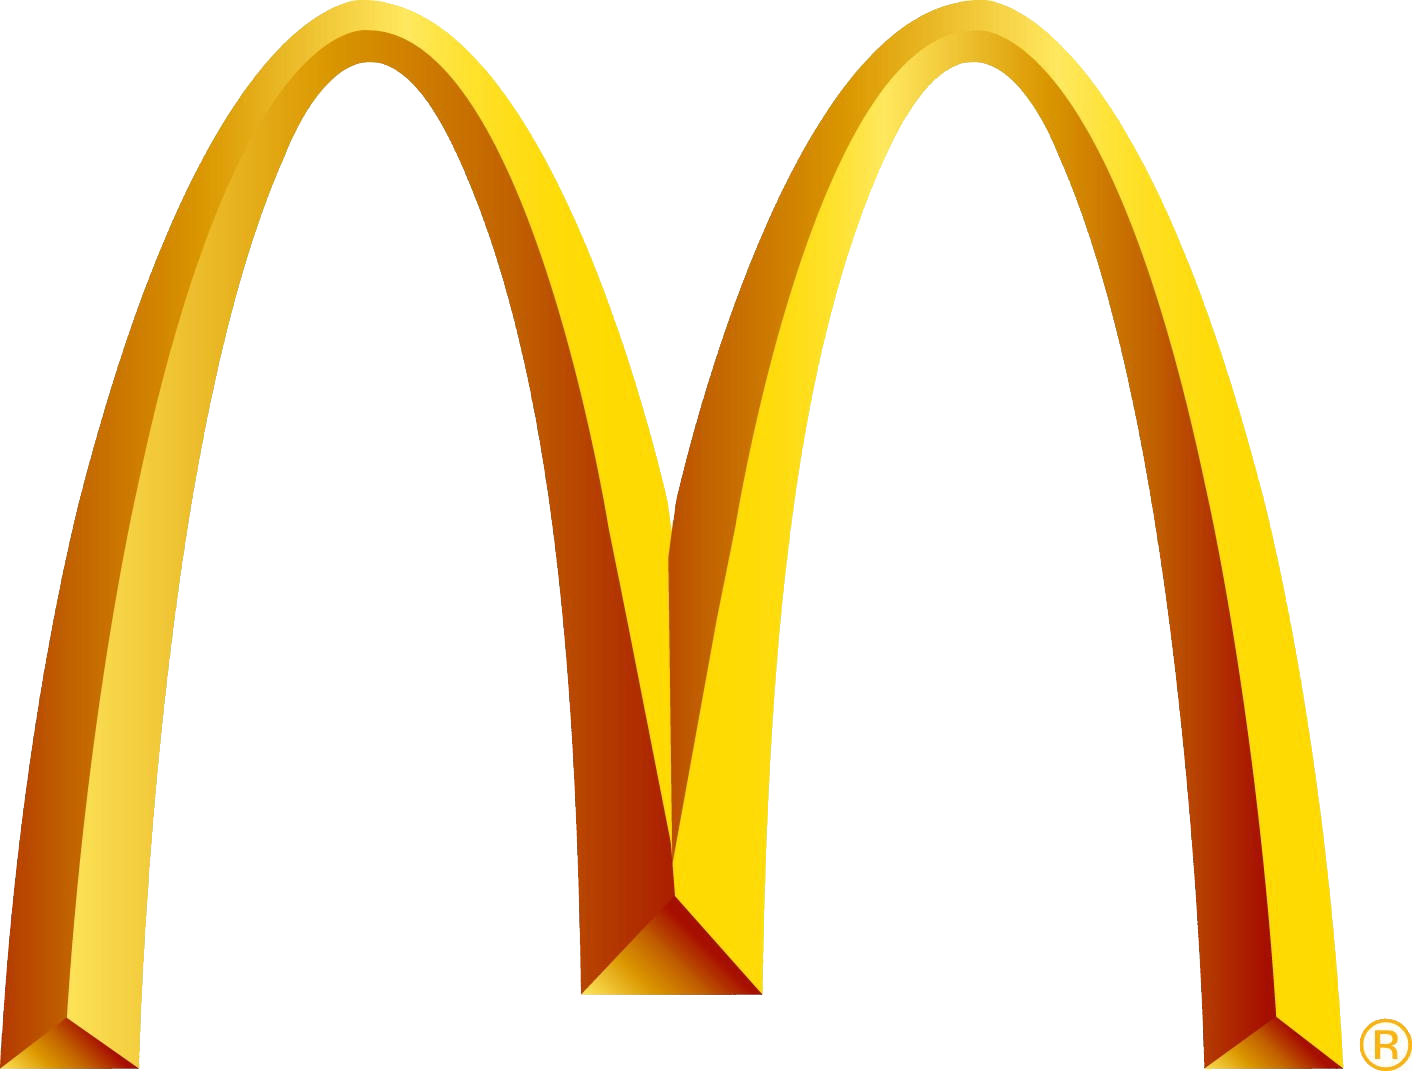 McDonald's logo PNG image free download